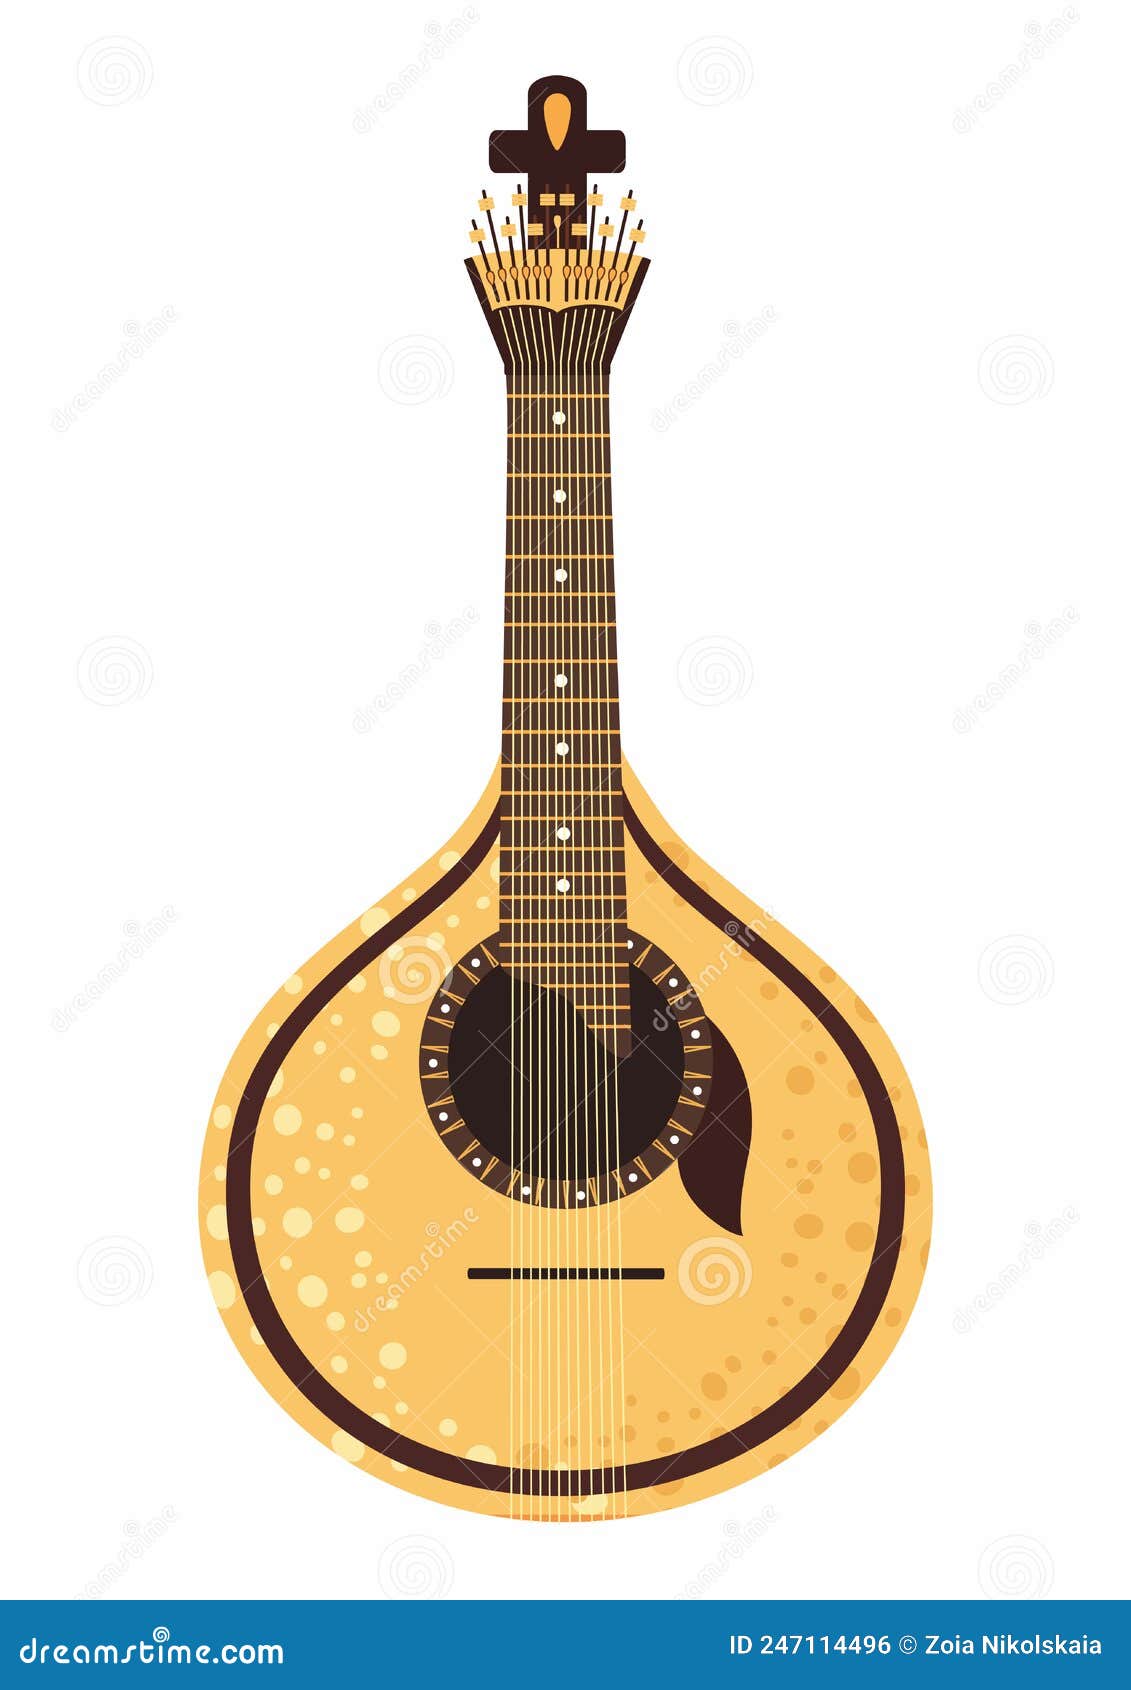 guitarra portuguesa ancient fado folk musical instrument in portugal. portuguese guitar.  